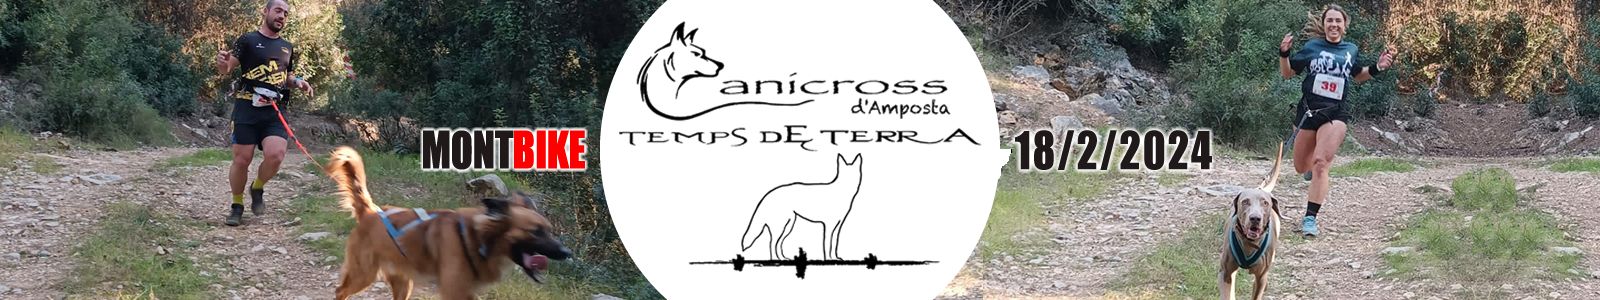 Canicross dAmposta - Amposta, 18/2/2024